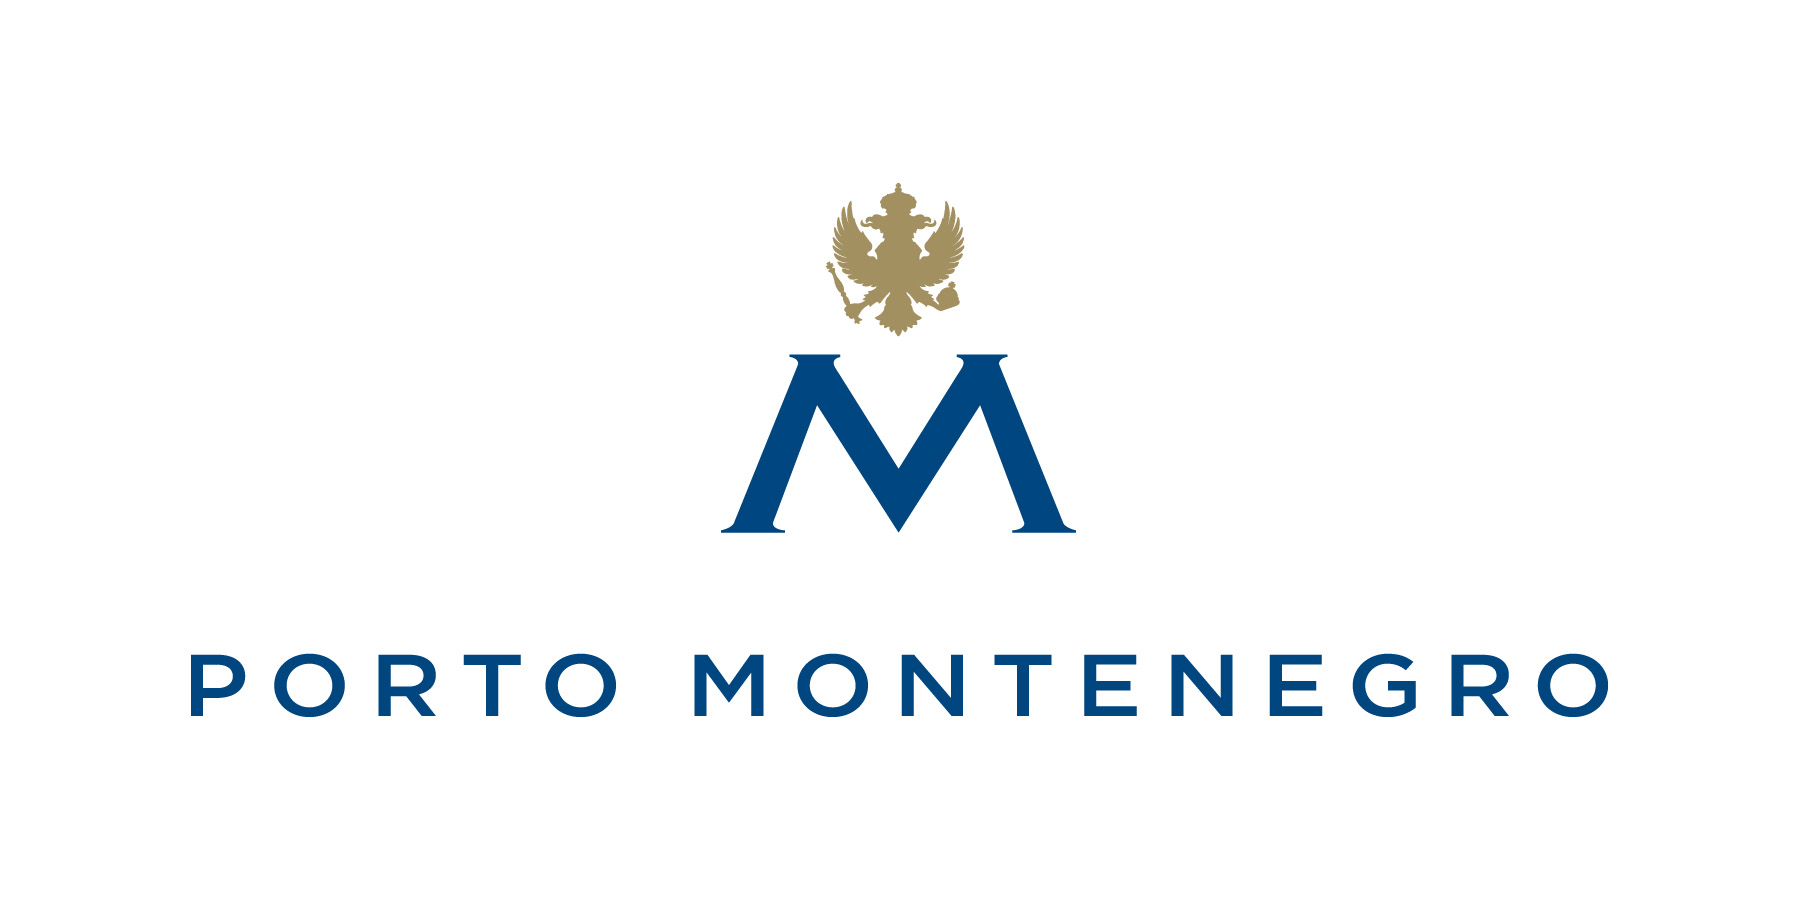 Welcome our newest Premium member Porto Montenegro